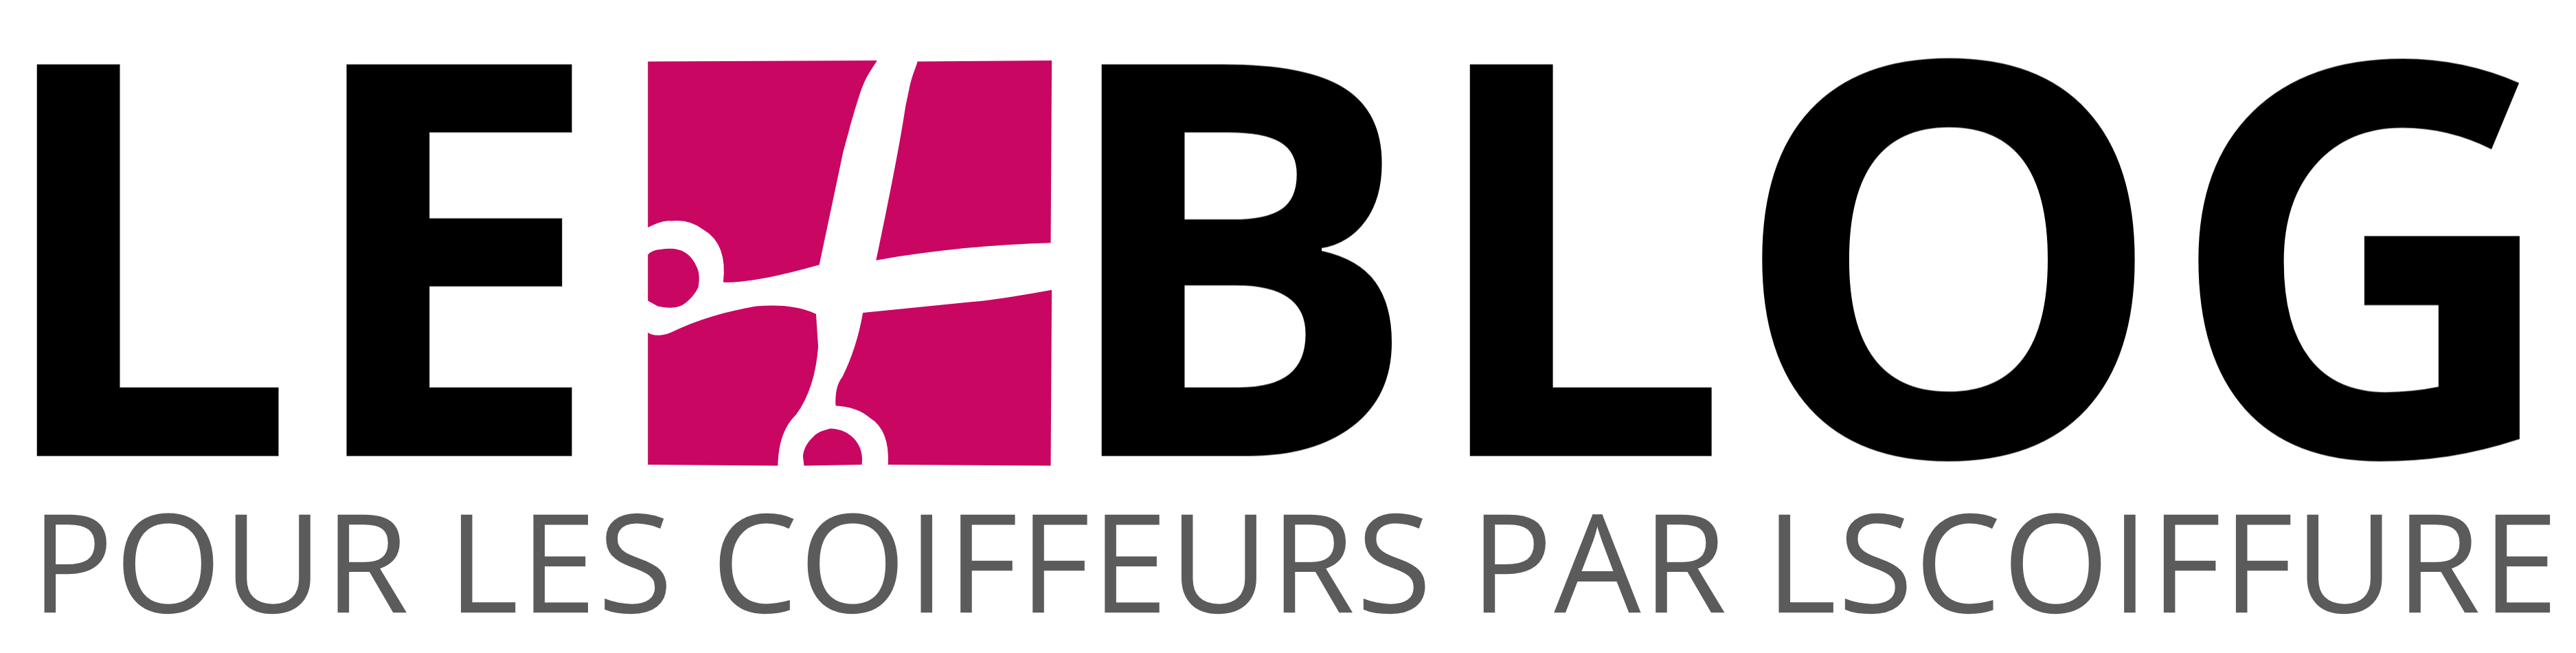 le blog lscoiffure 2 logo 3